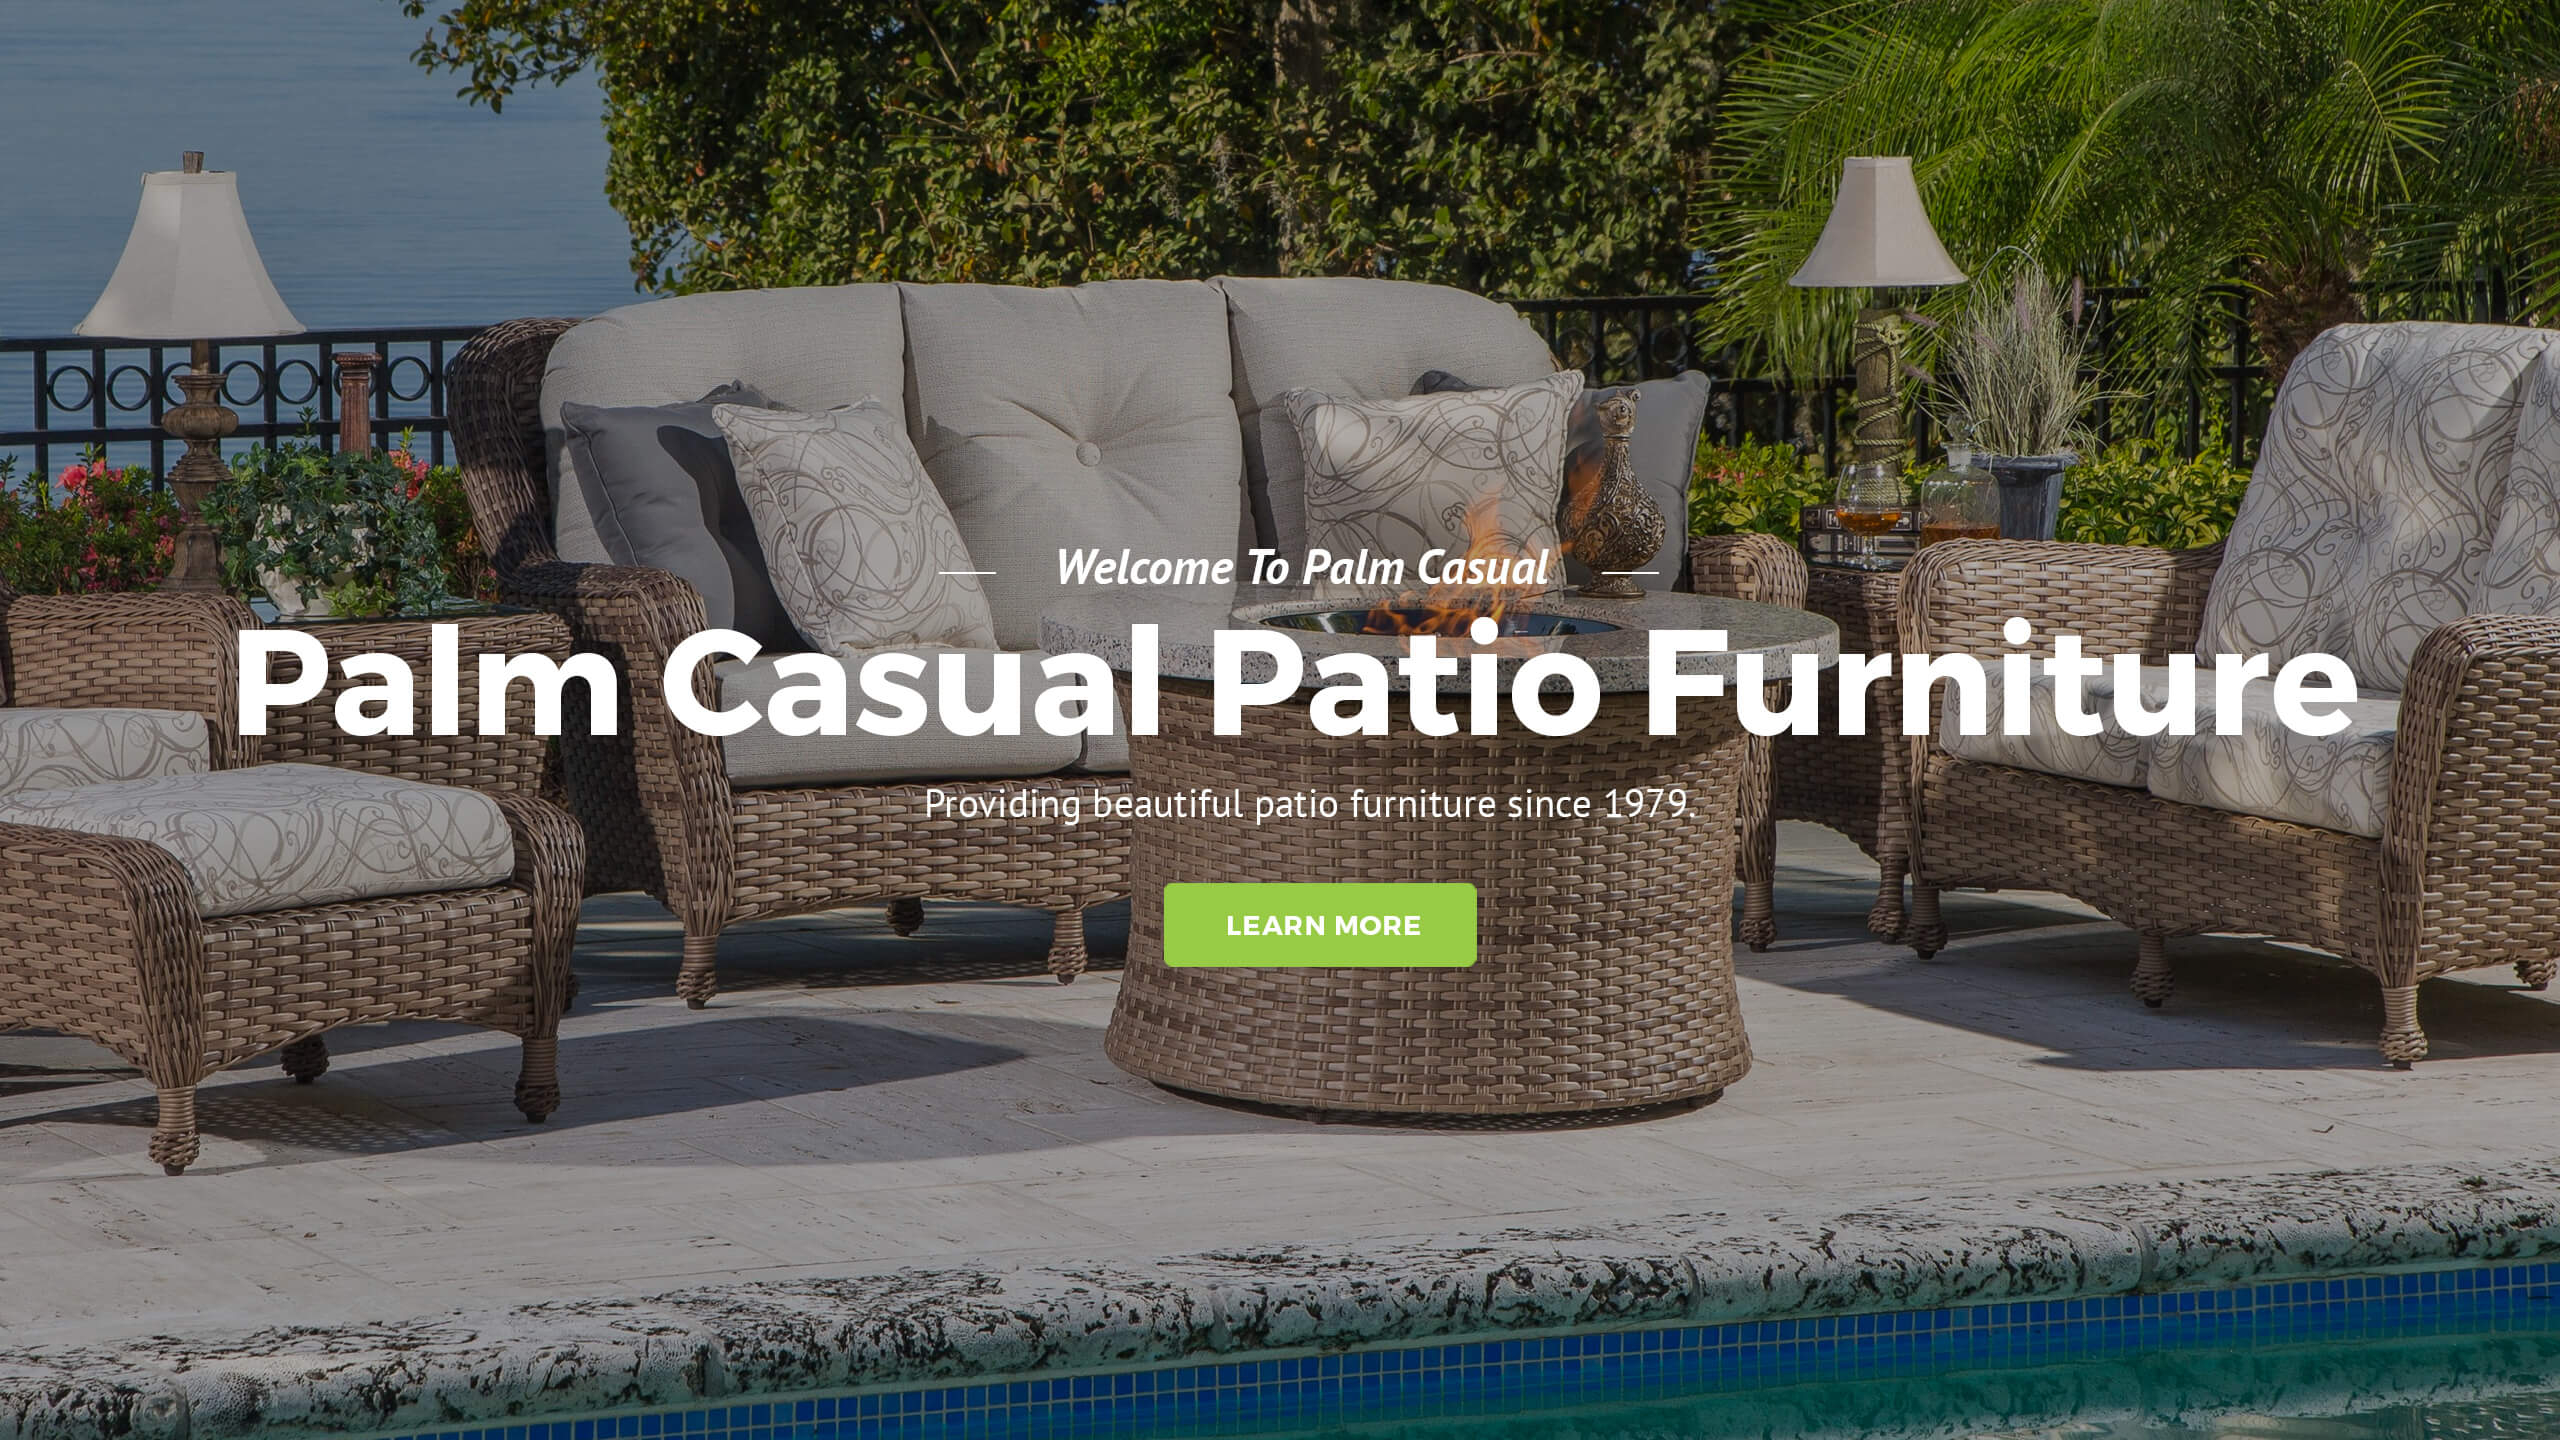 Outdoor Patio Furniture Orlando Cast Aluminium Furniture throughout proportions 2560 X 1440